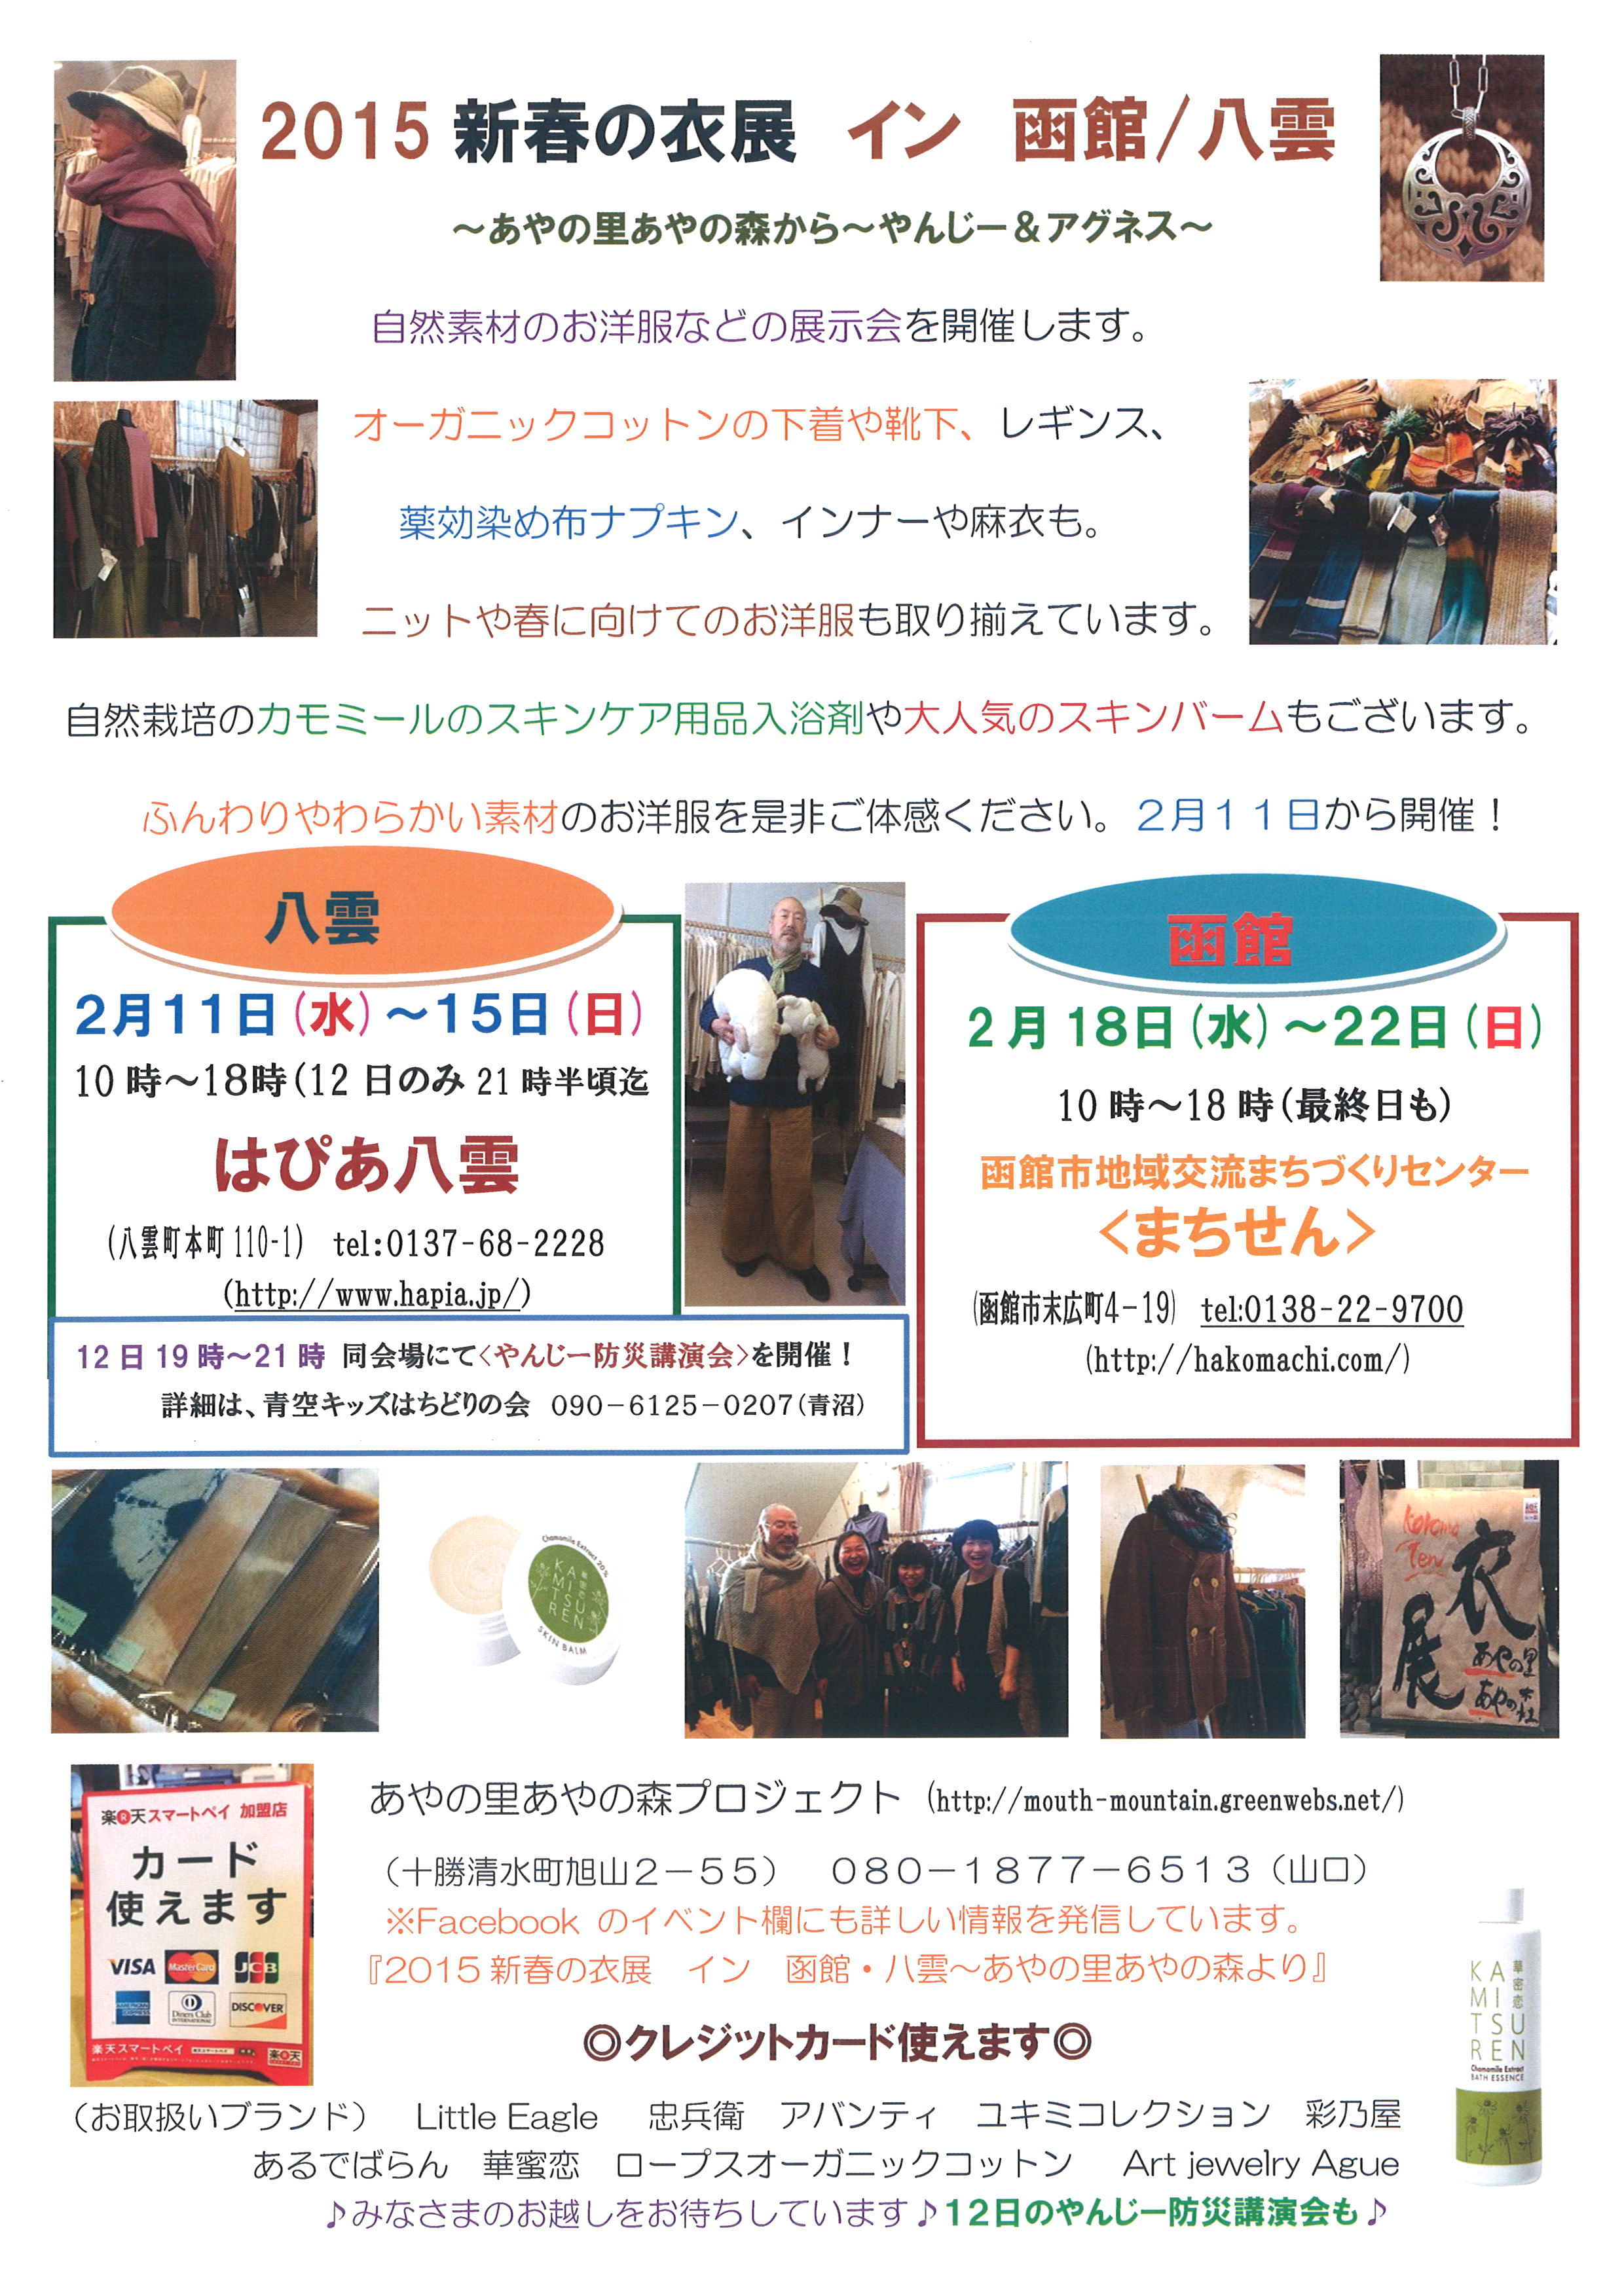 http://hakomachi.com/diary2/images/20150207140058_00002.jpg